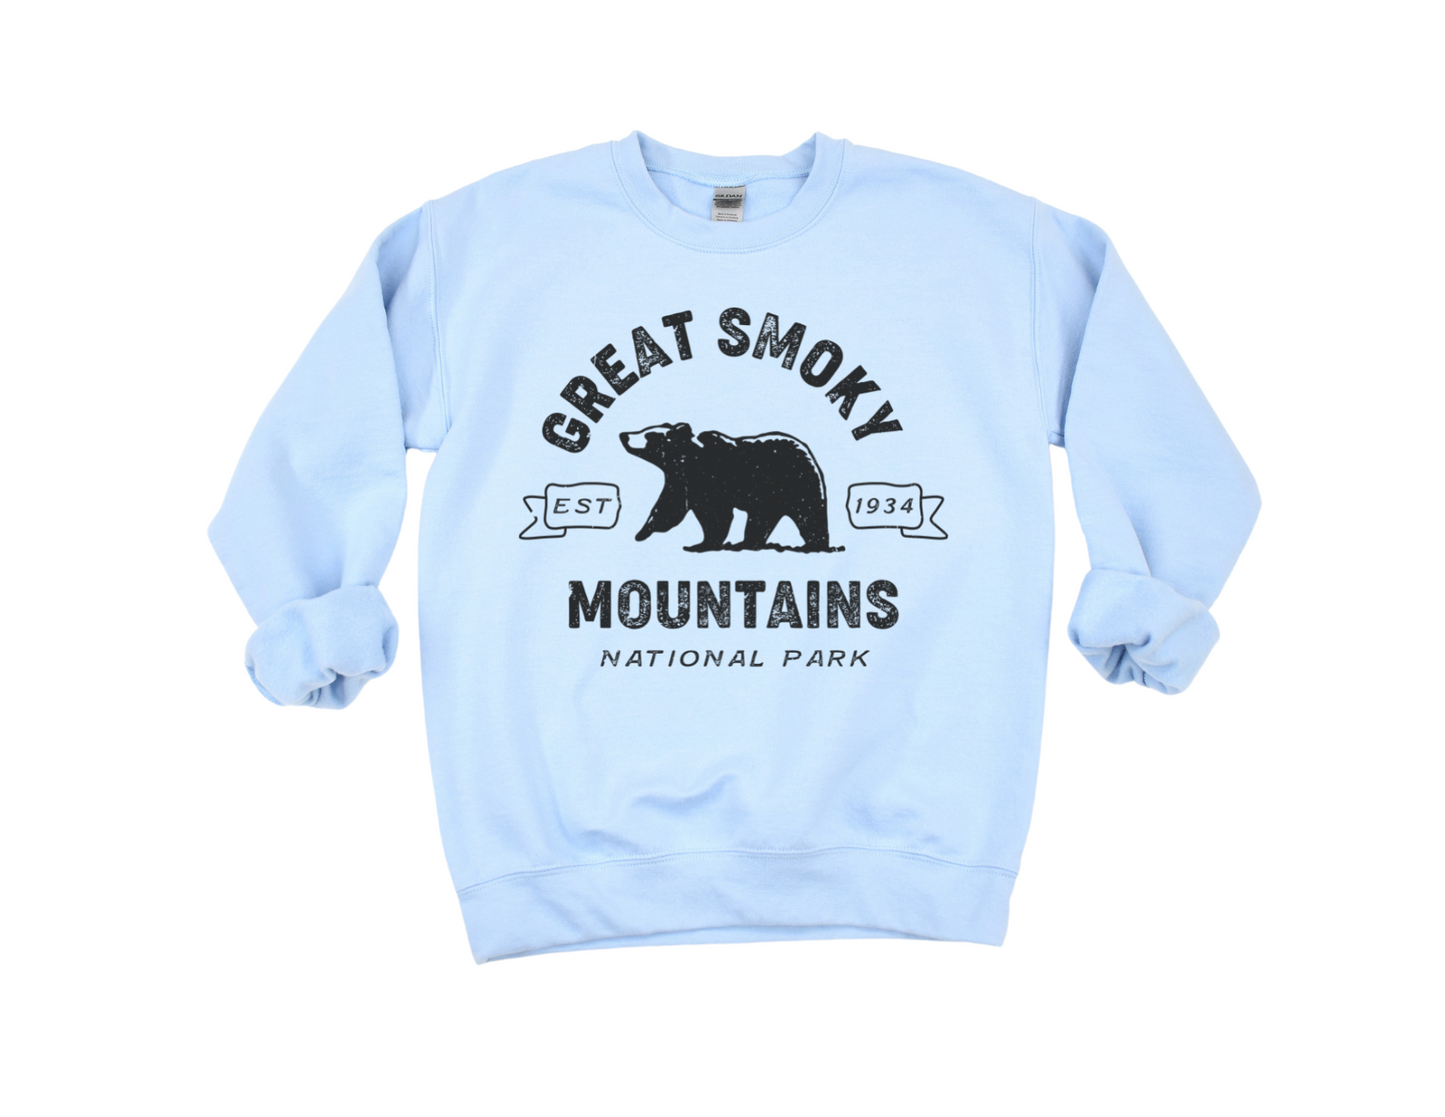 Great Smoky Mountains National Park Unisex Sweatshirt